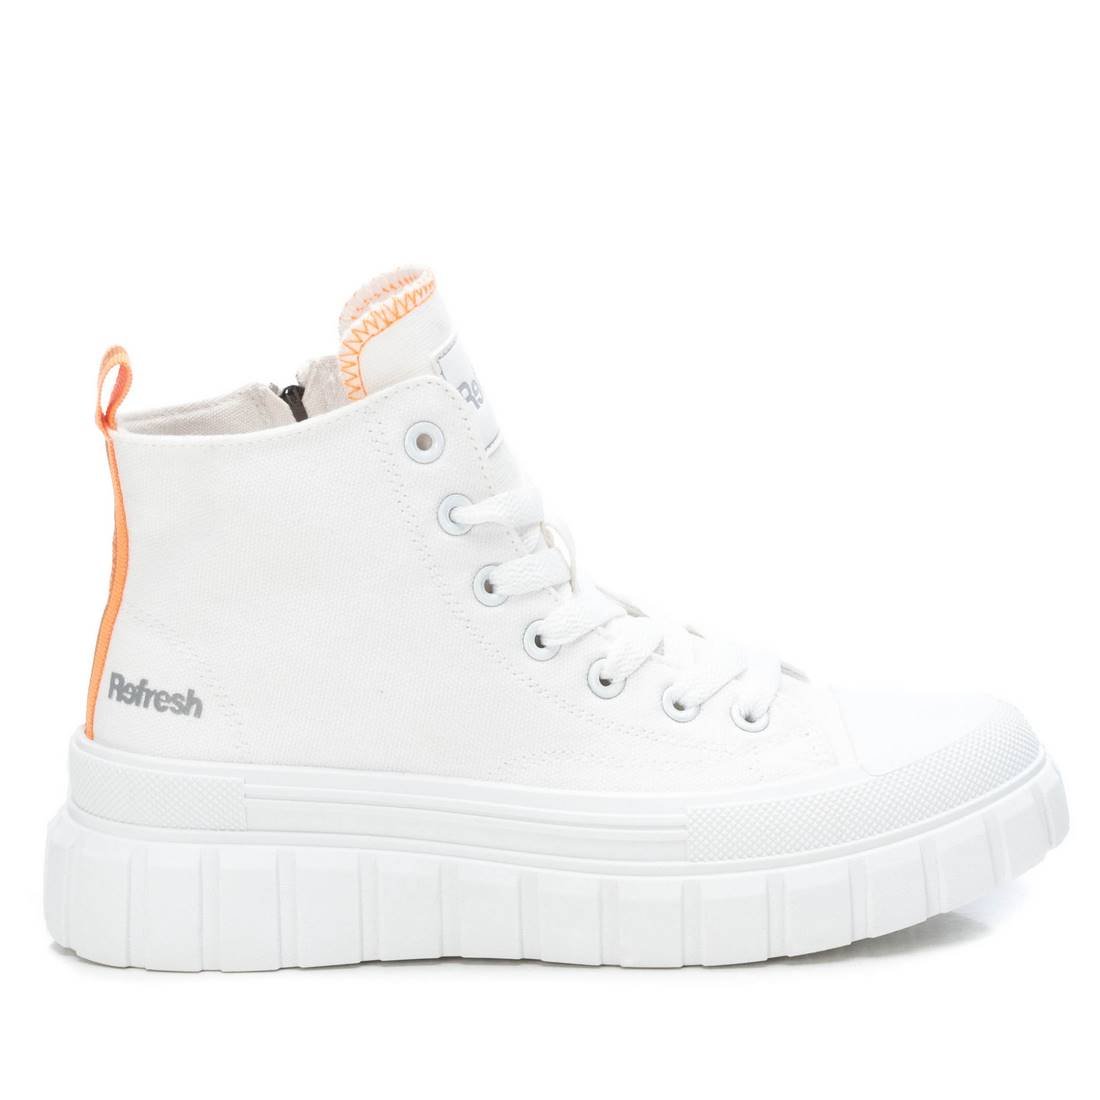 Sneaker Refresh 170791 - blanco - 